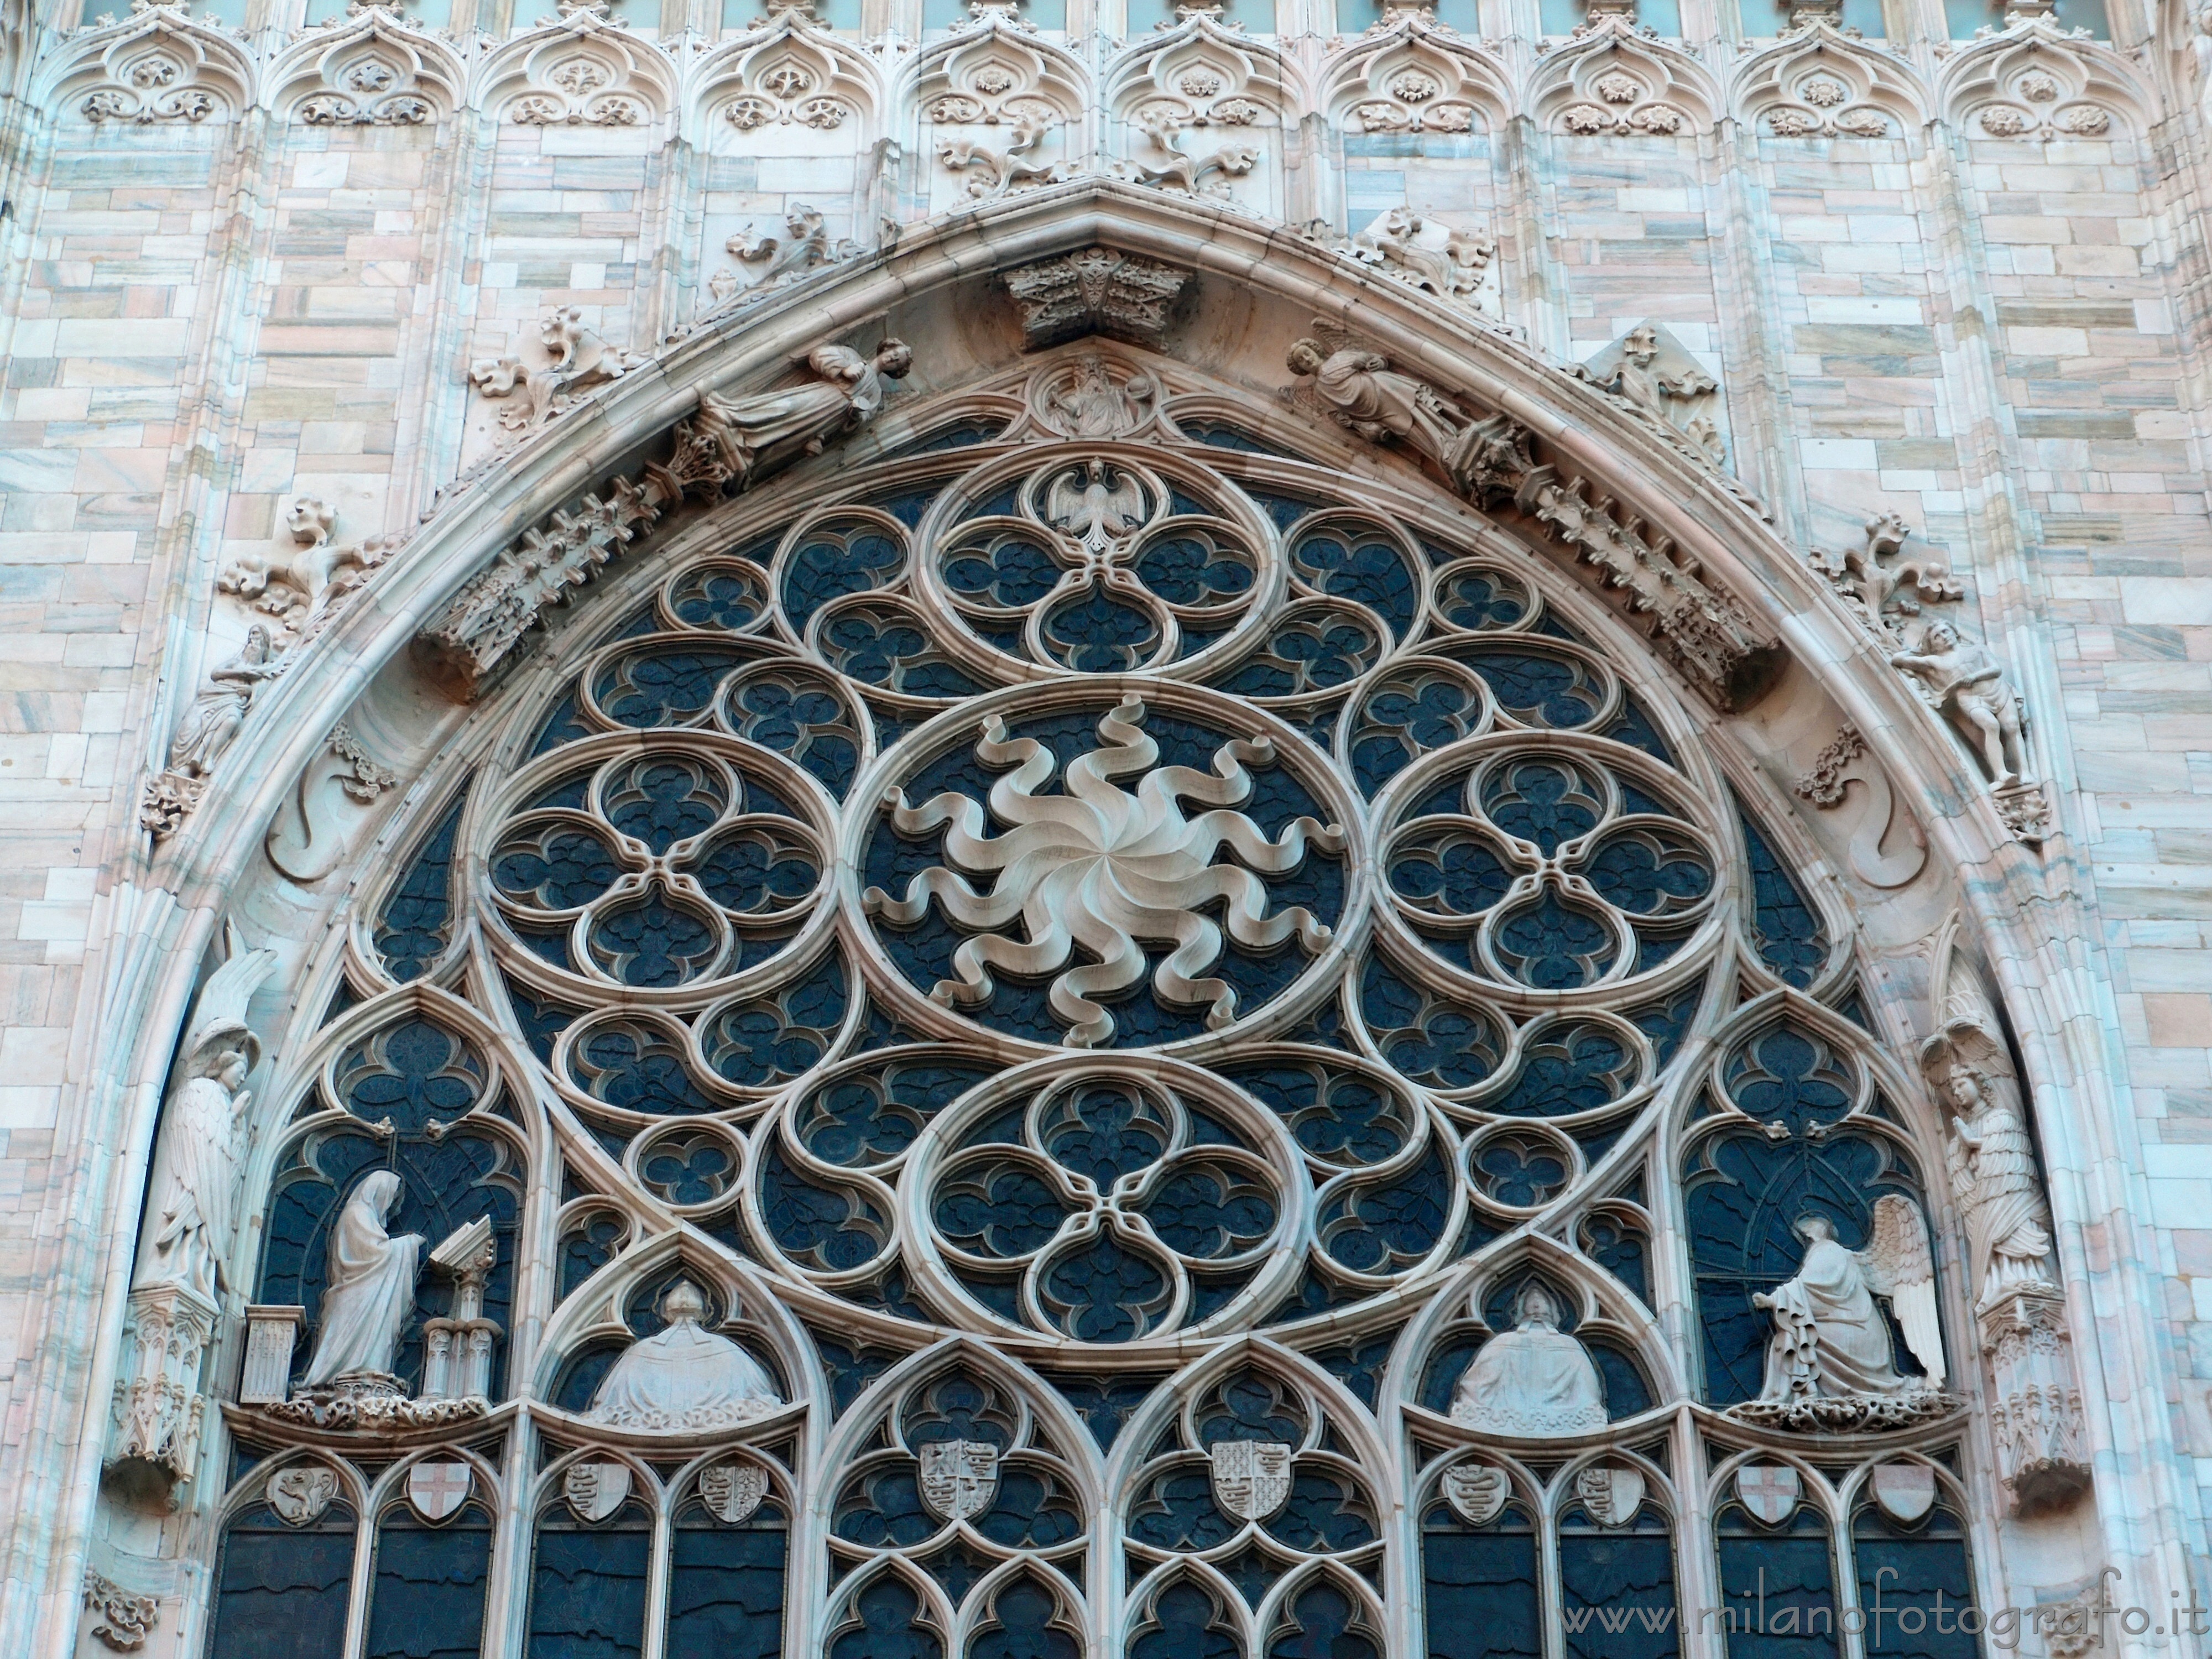 Milan (Italy): The rear central window of the Duomo - Milan (Italy)